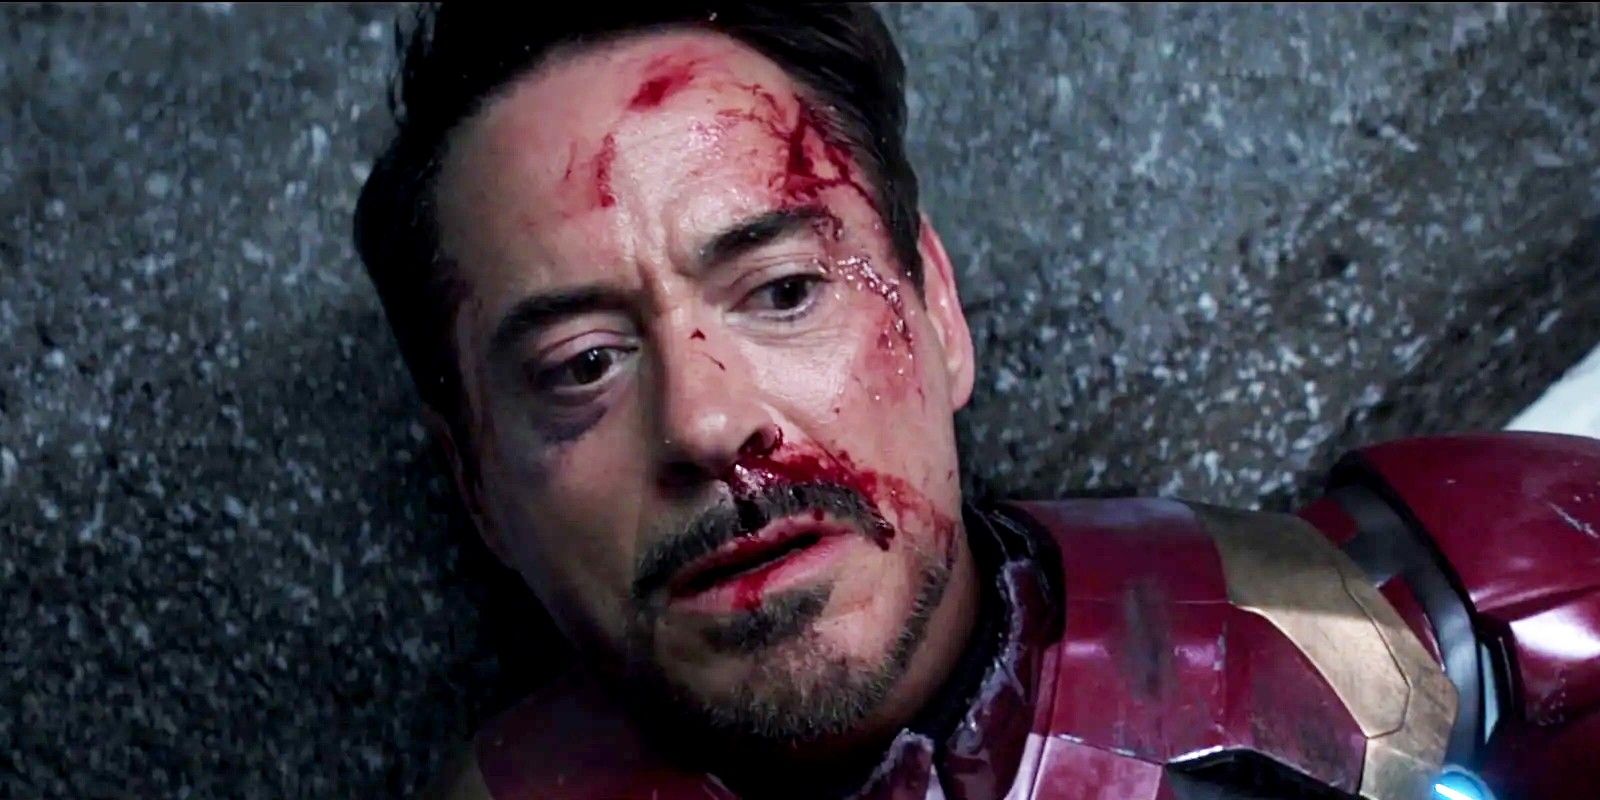 Robert Downey Jr as Iron Man in Civil War